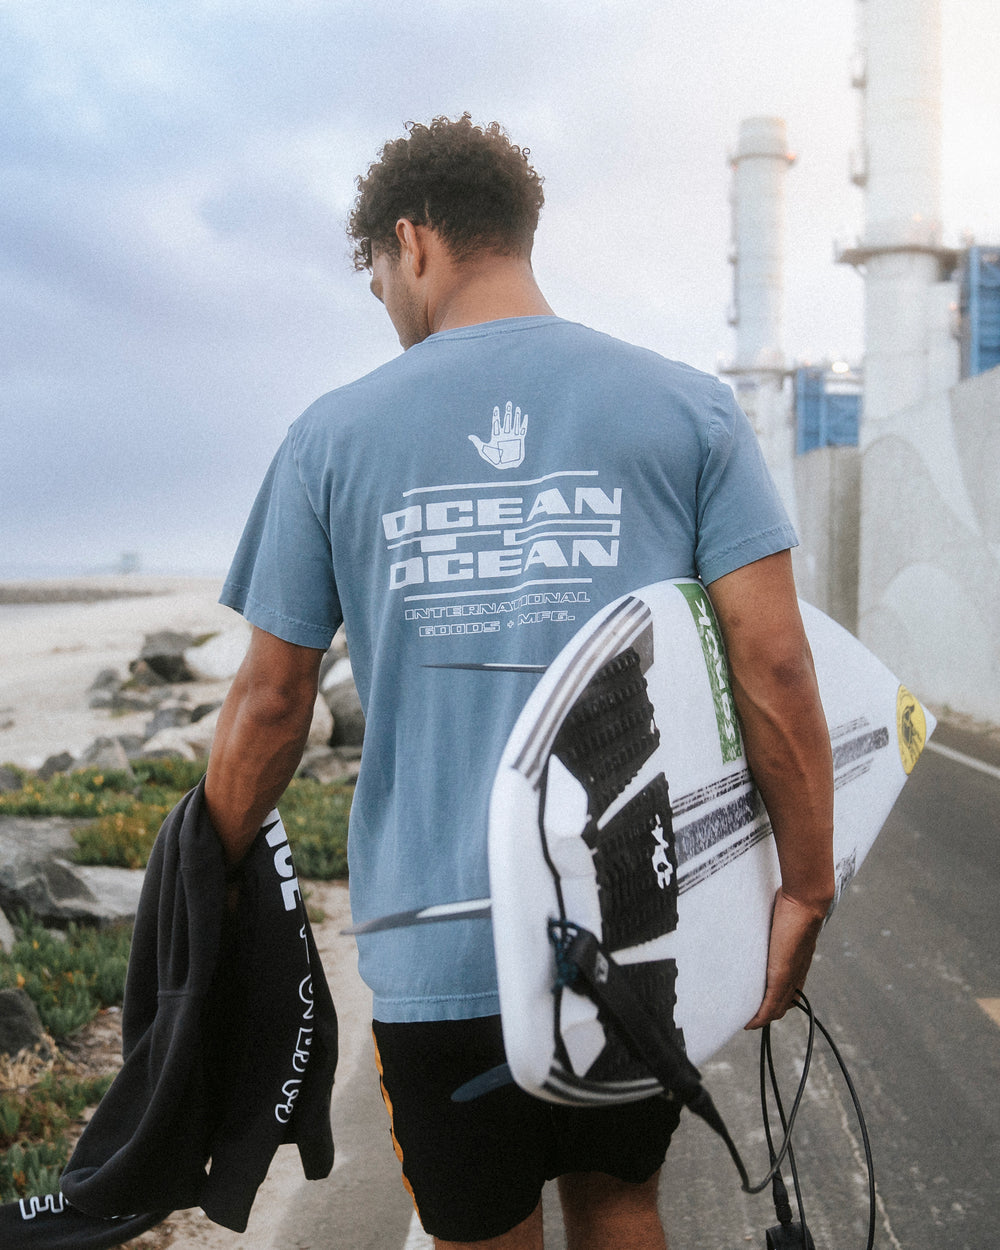 Ocean to Ocean Premium T-Shirt - Pigment Dusk